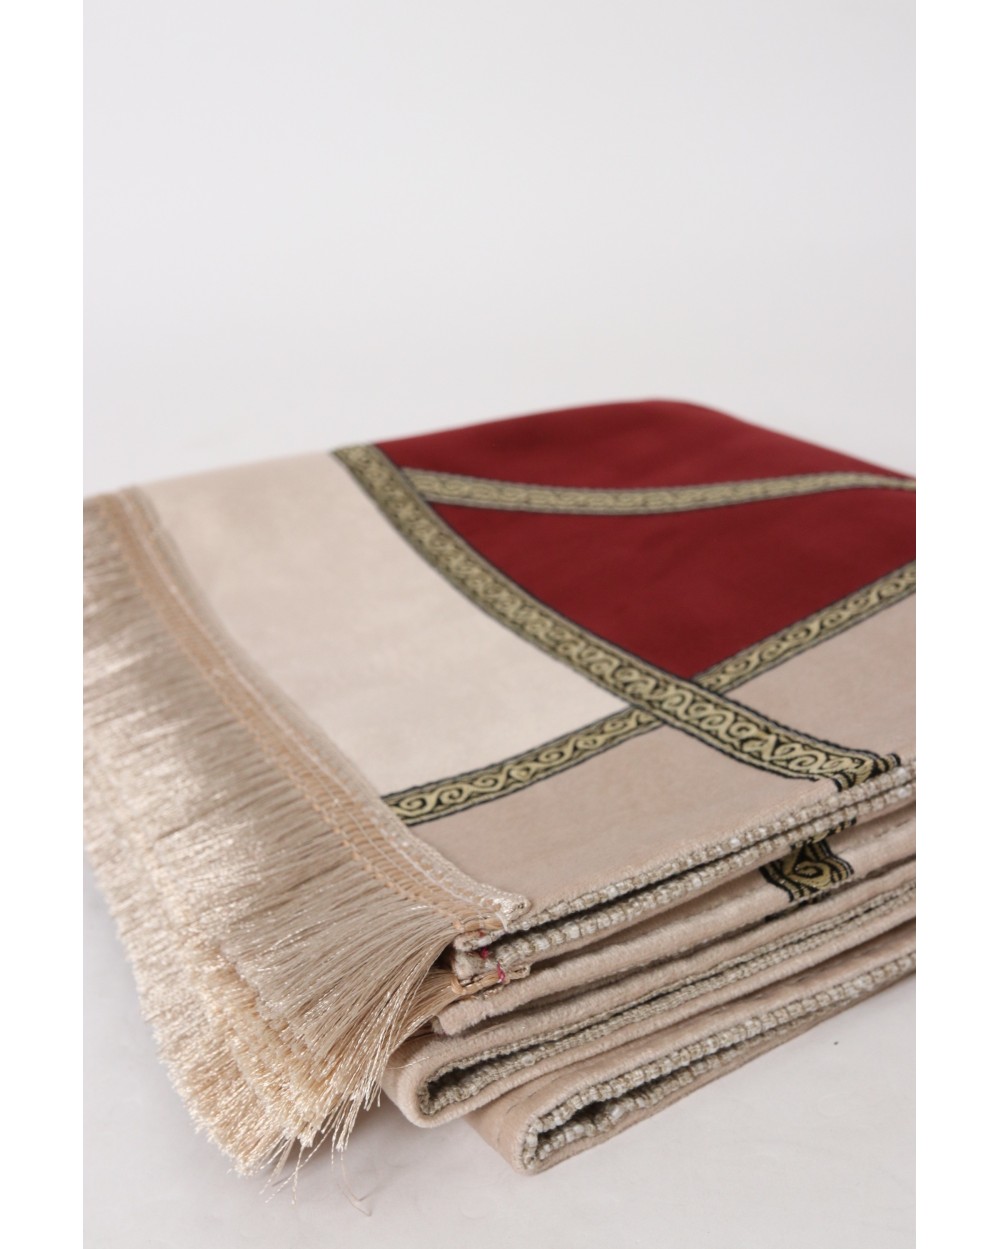 Ottoman prayer rug